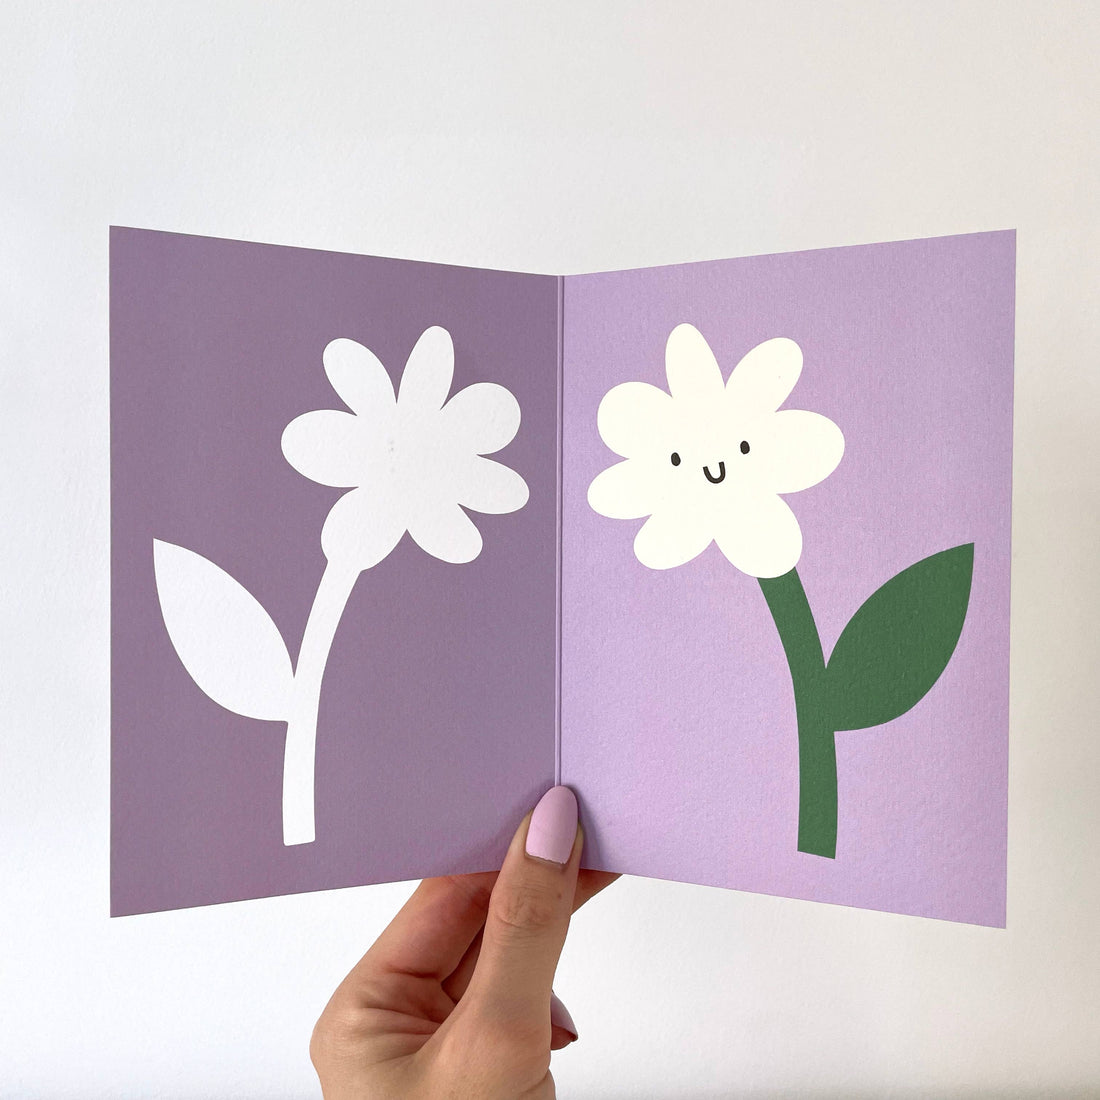 Flower Card - Die Cut Cards - Floral - Just Because - Cute